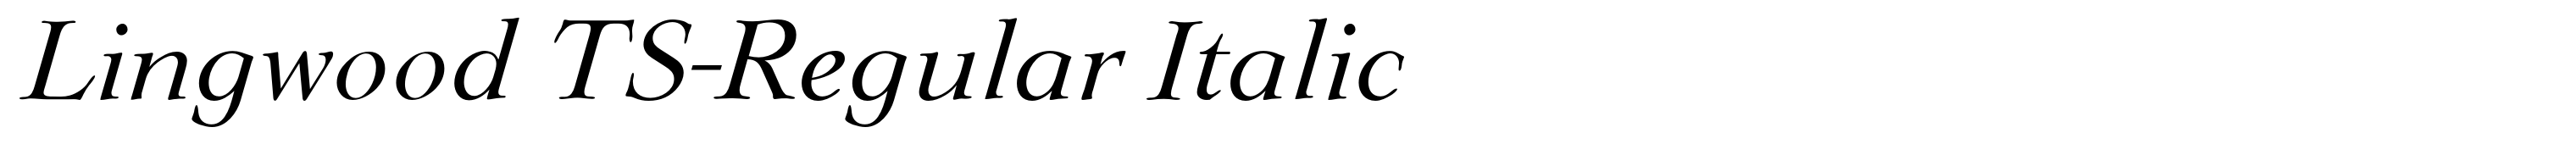 Lingwood TS-Regular Italic